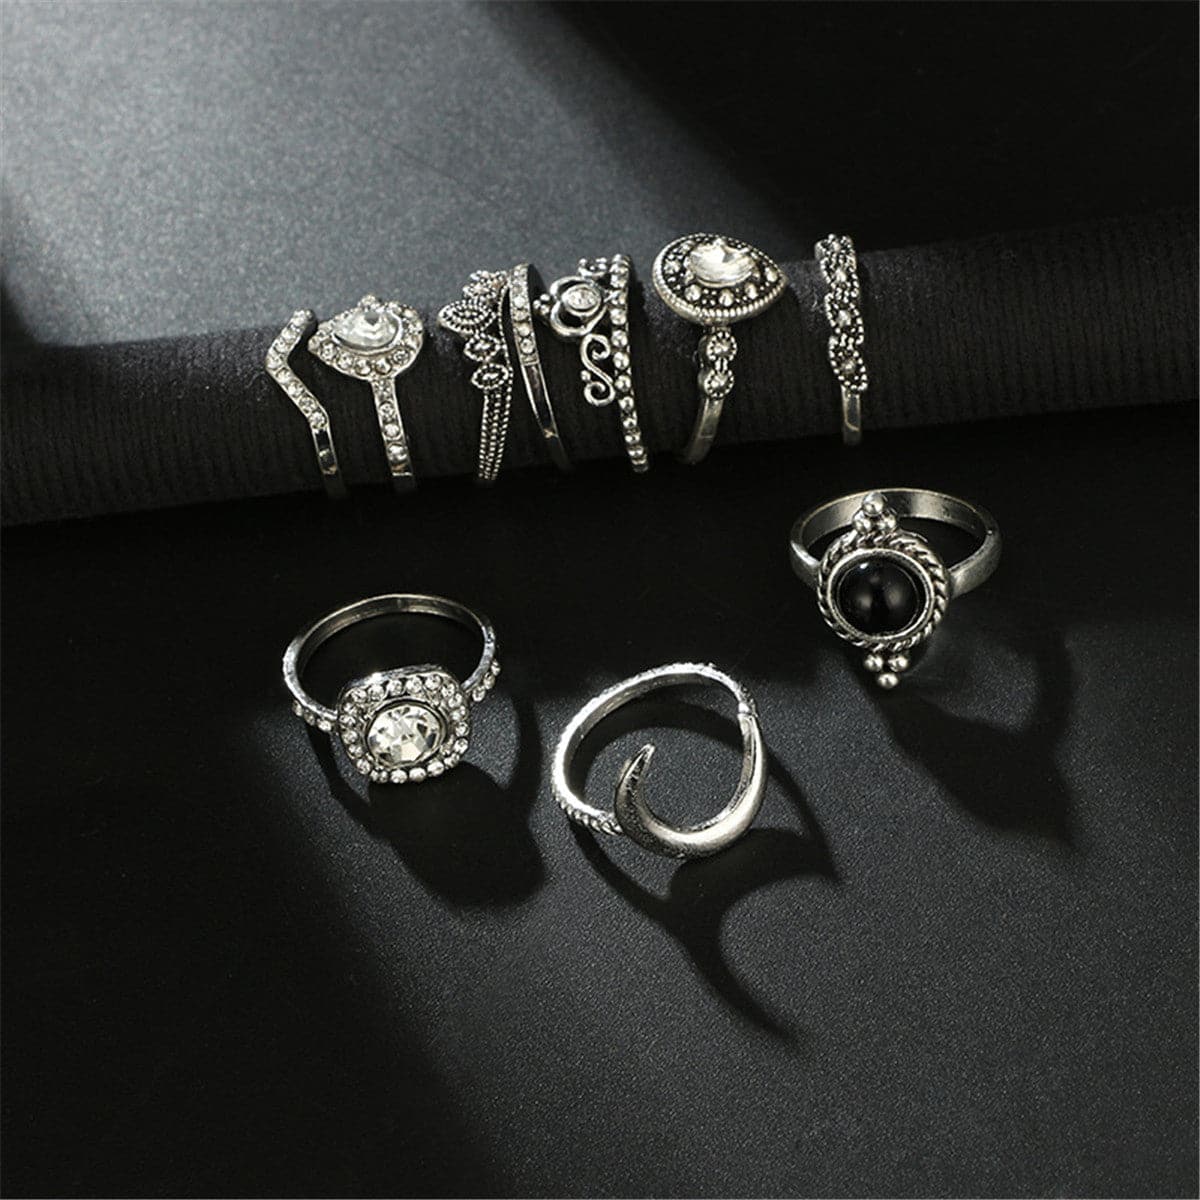 Cubic Zirconia & Silver-Plated Pavé Teardrop Ring Set